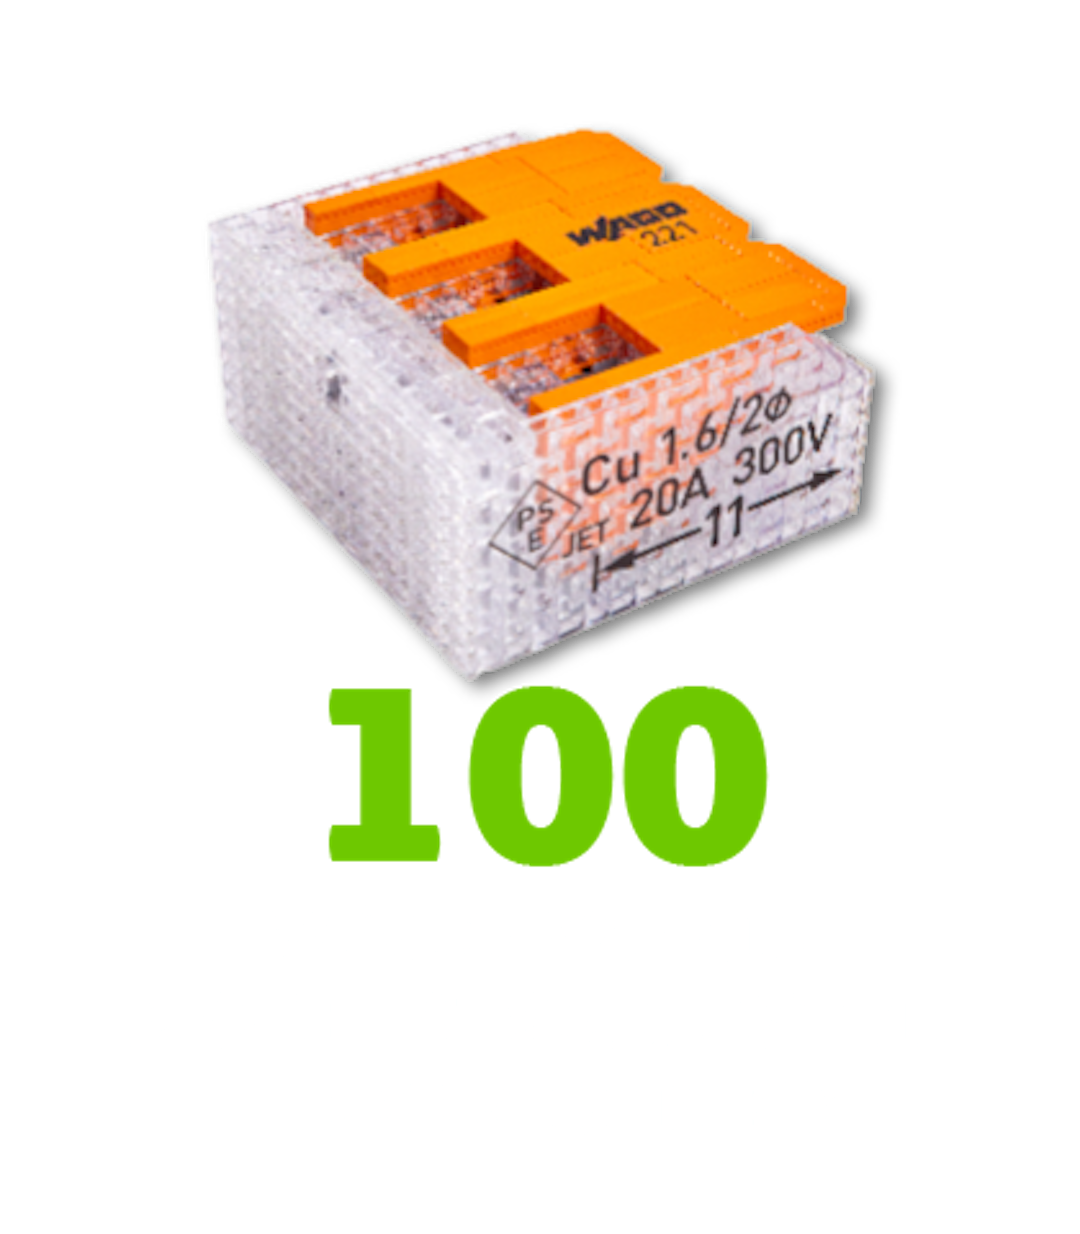 100 Wago 221-413 models made with Lego bricks